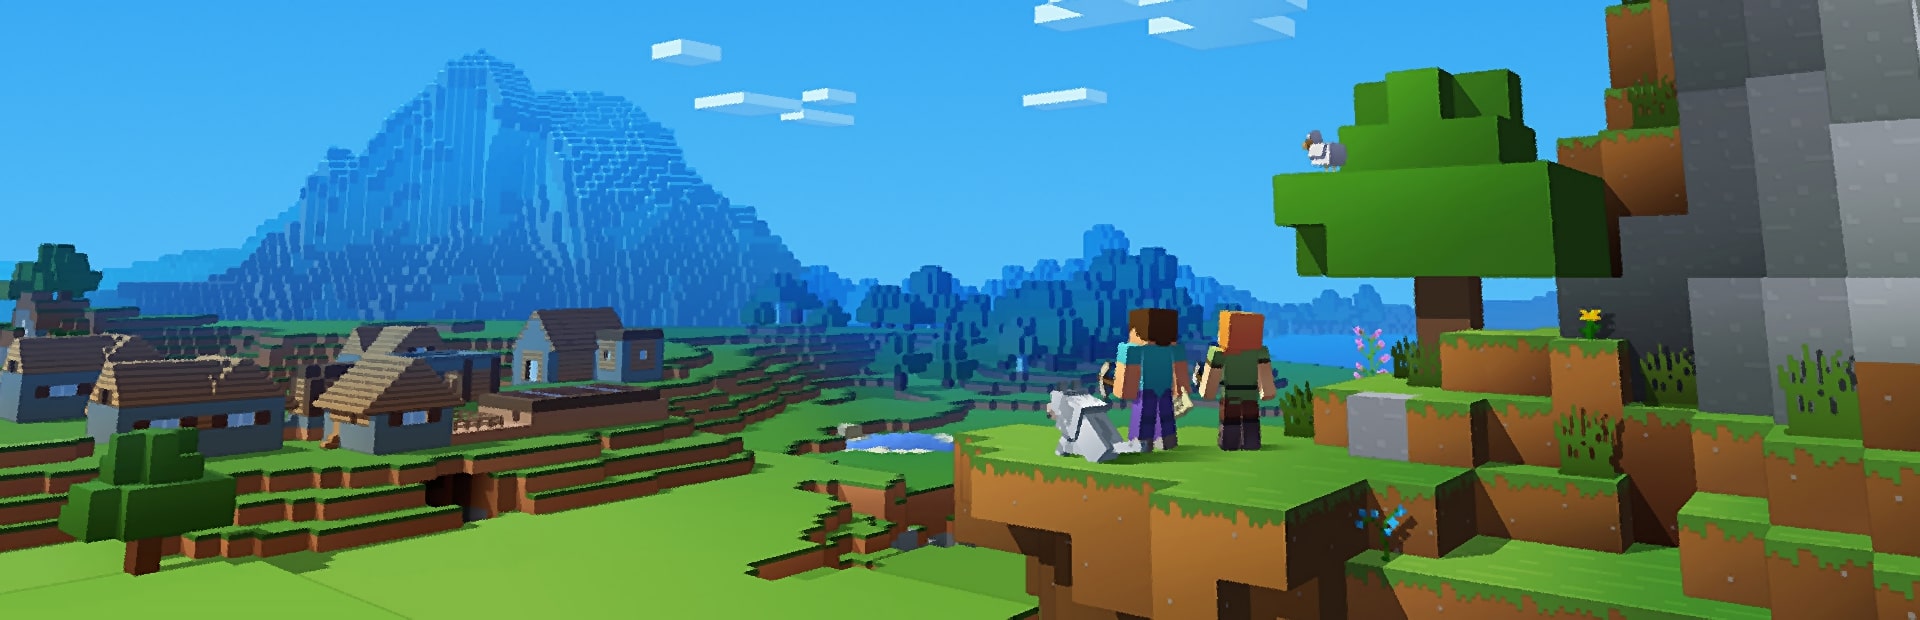 Minecraft Bedrock Edition | PC | Windows Digital Download | Wallpaper